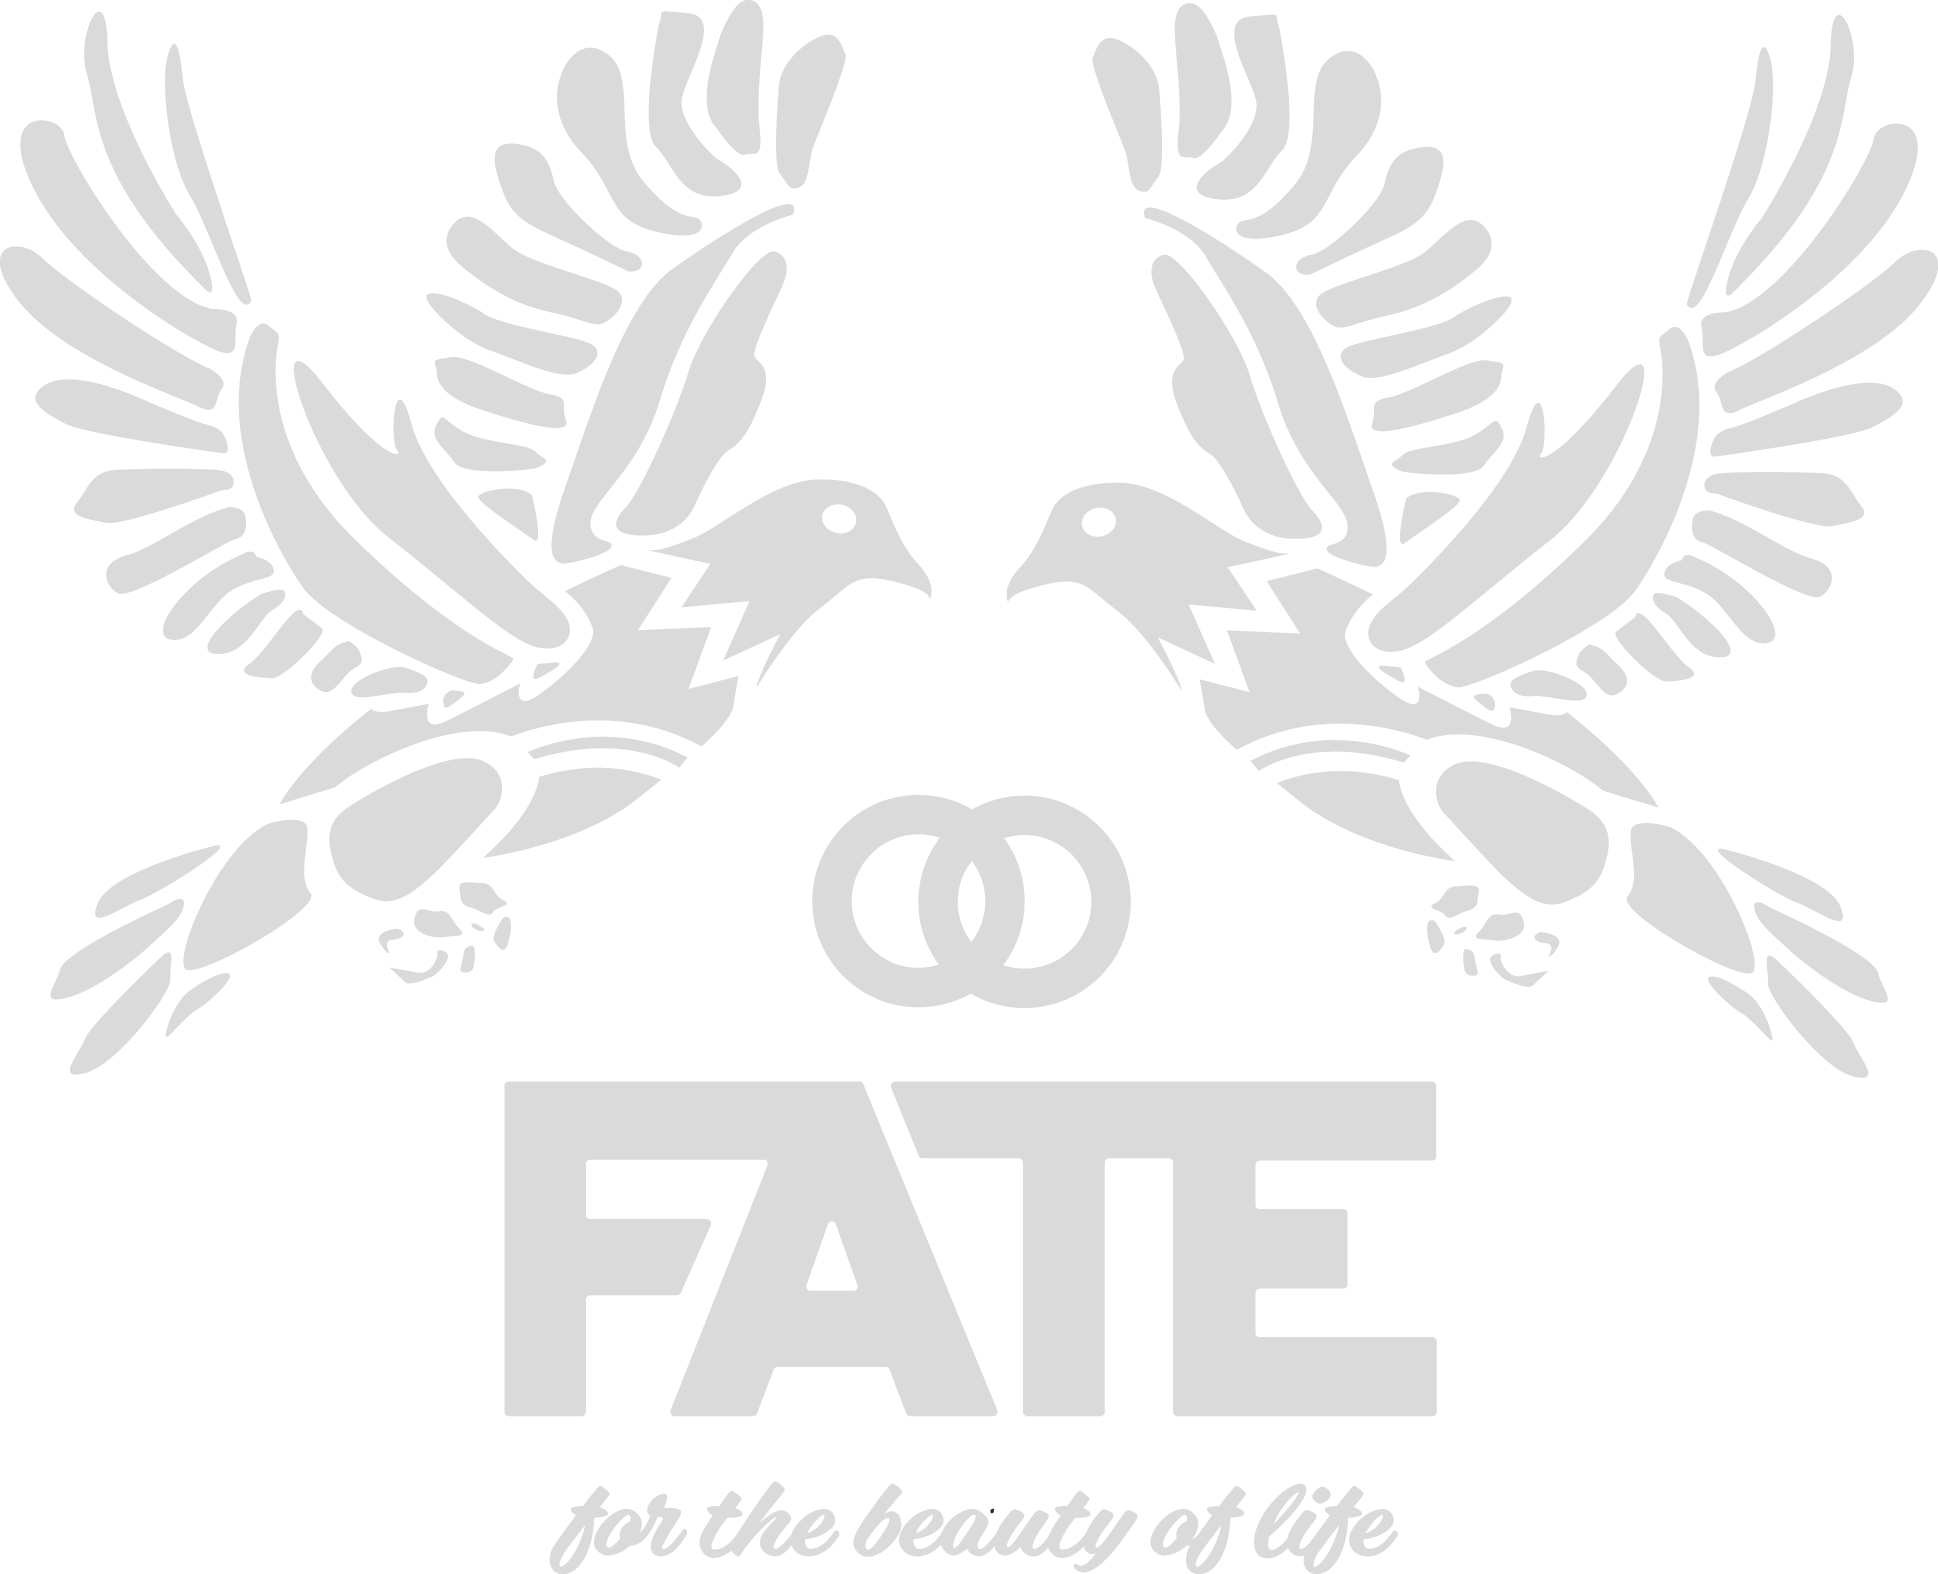 011_01_fate_logo_Grau-08